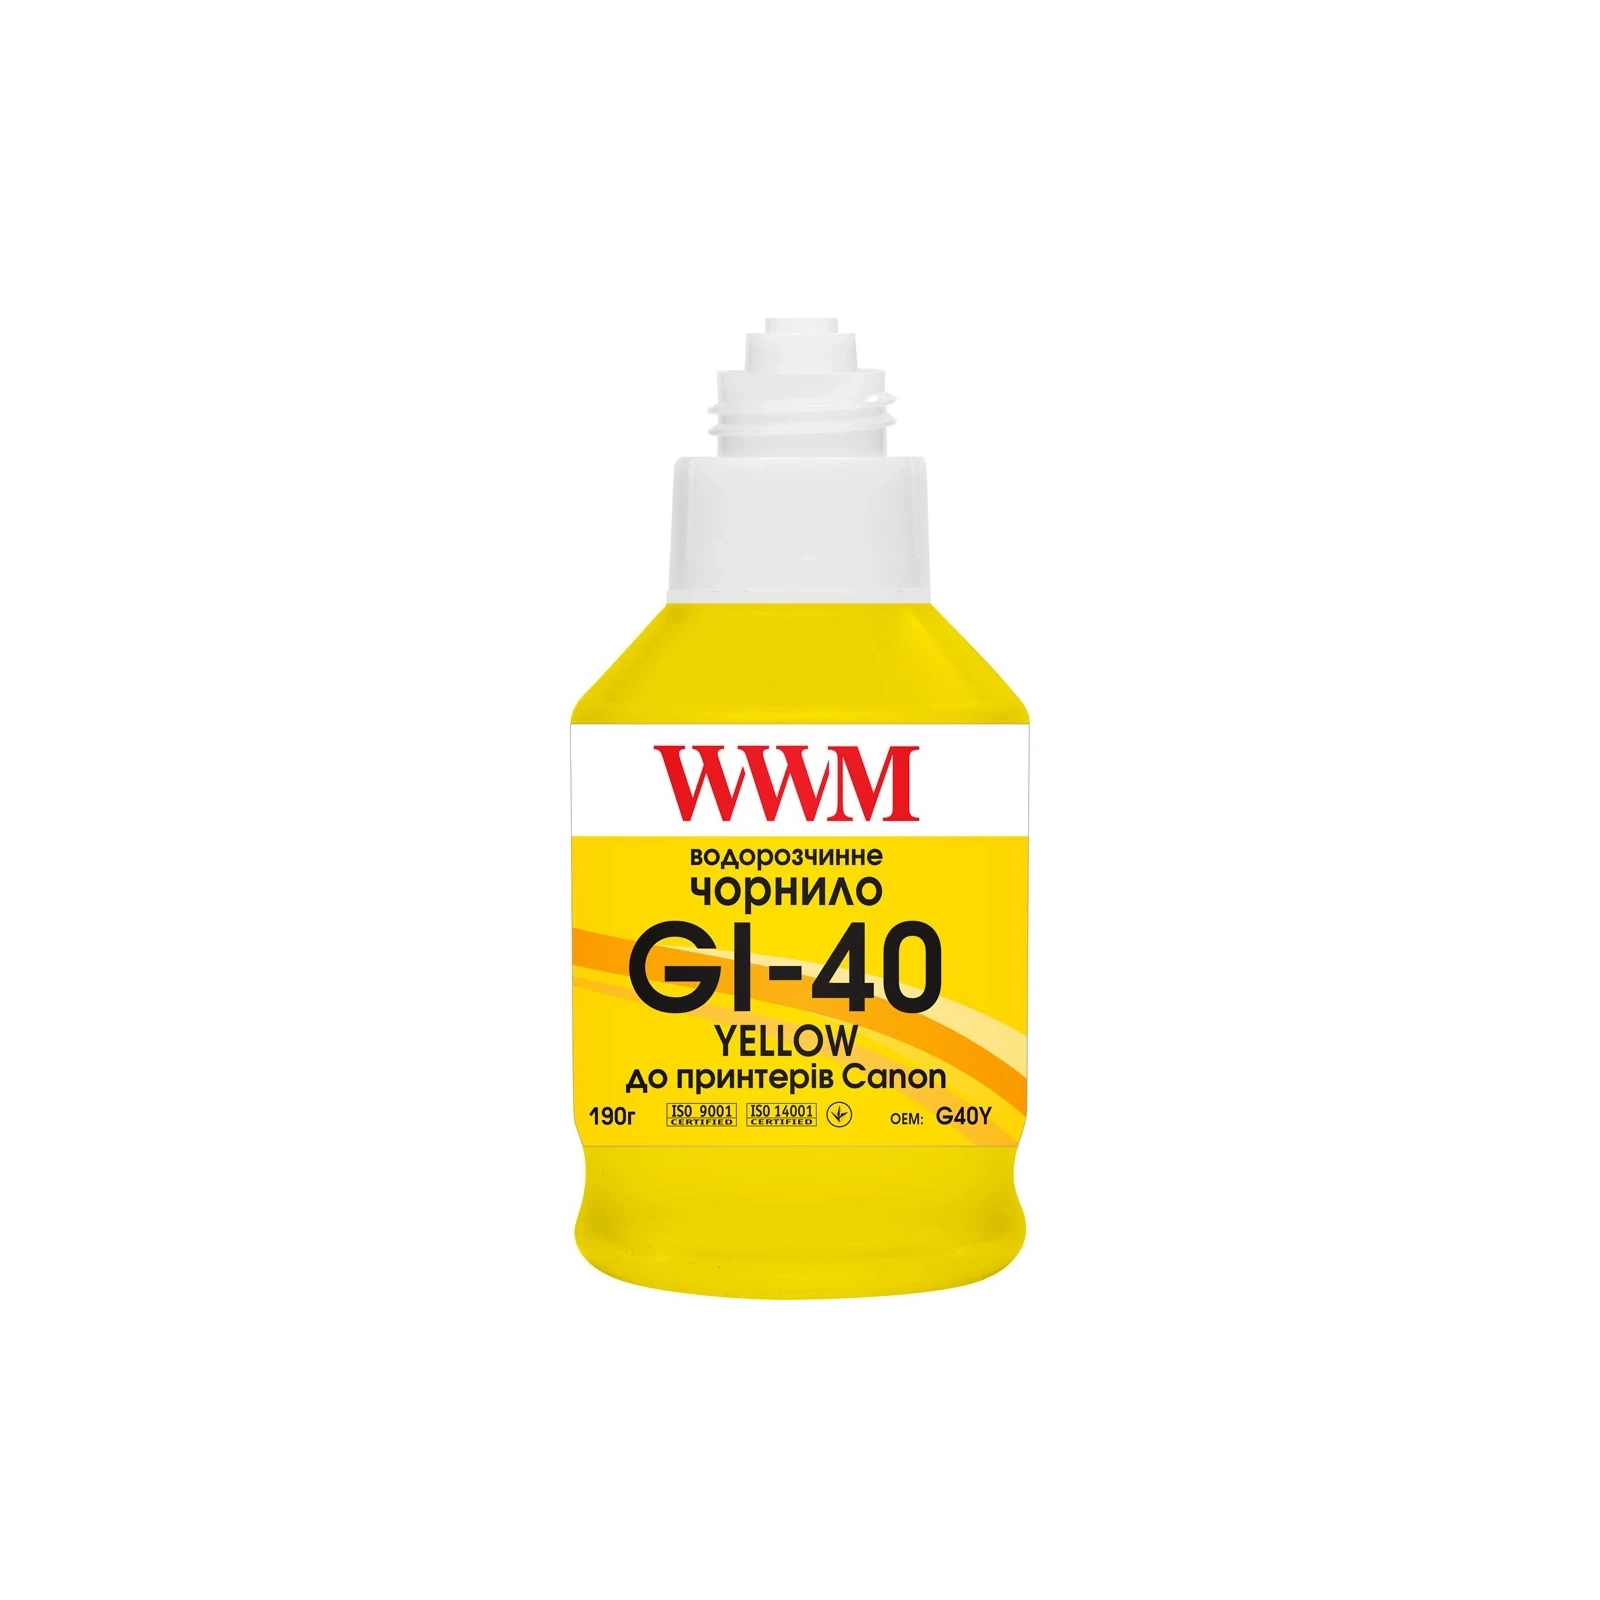 Чернила WWM Canon GI-40 для G5040/G6040 190г Black Pigmented (KeyLock) (G40BP) изображение 2